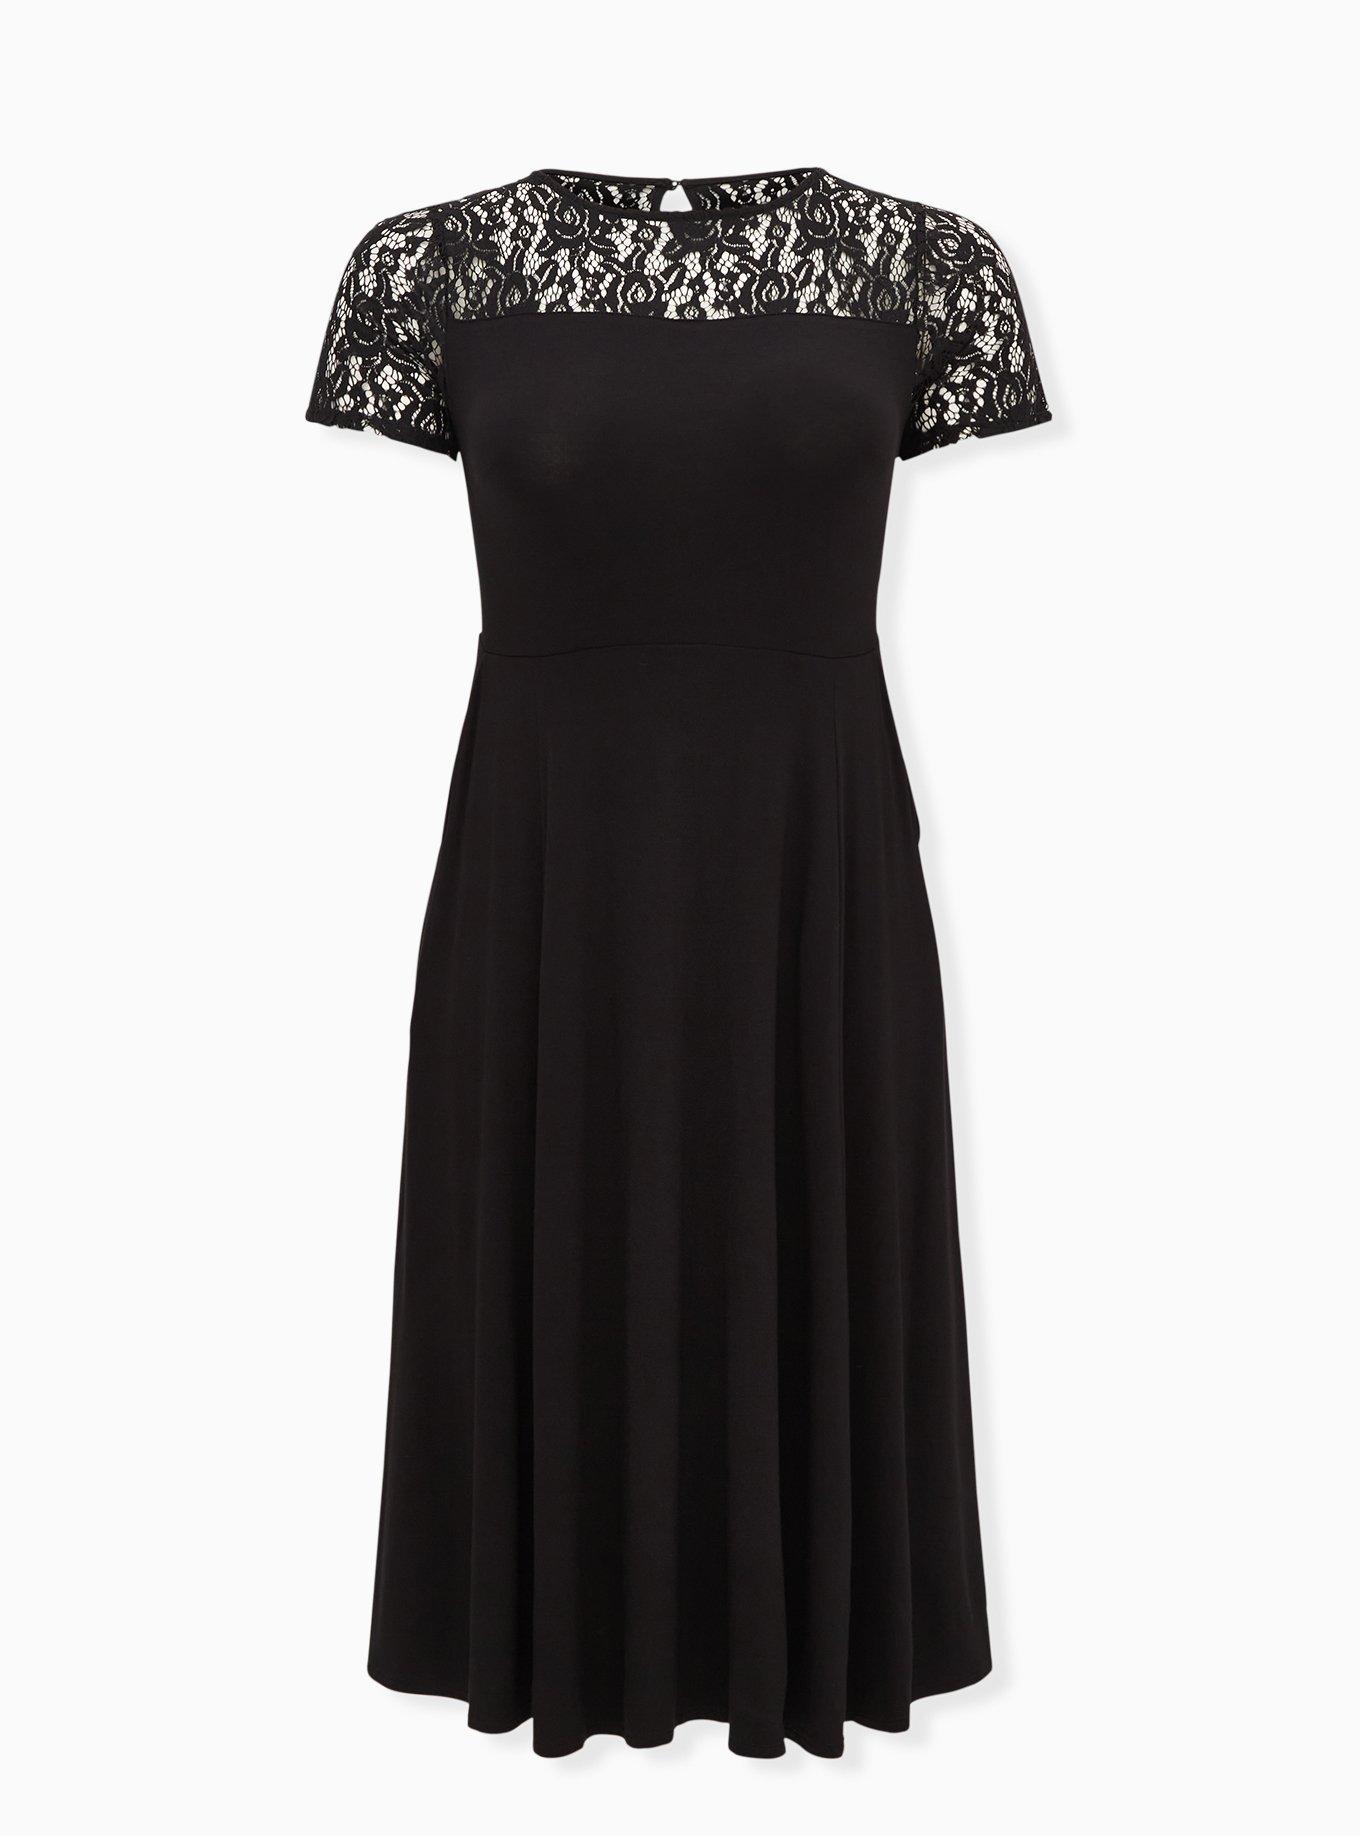 Plus Size - Super Soft Black Lace Inset Midi Dress - Torrid